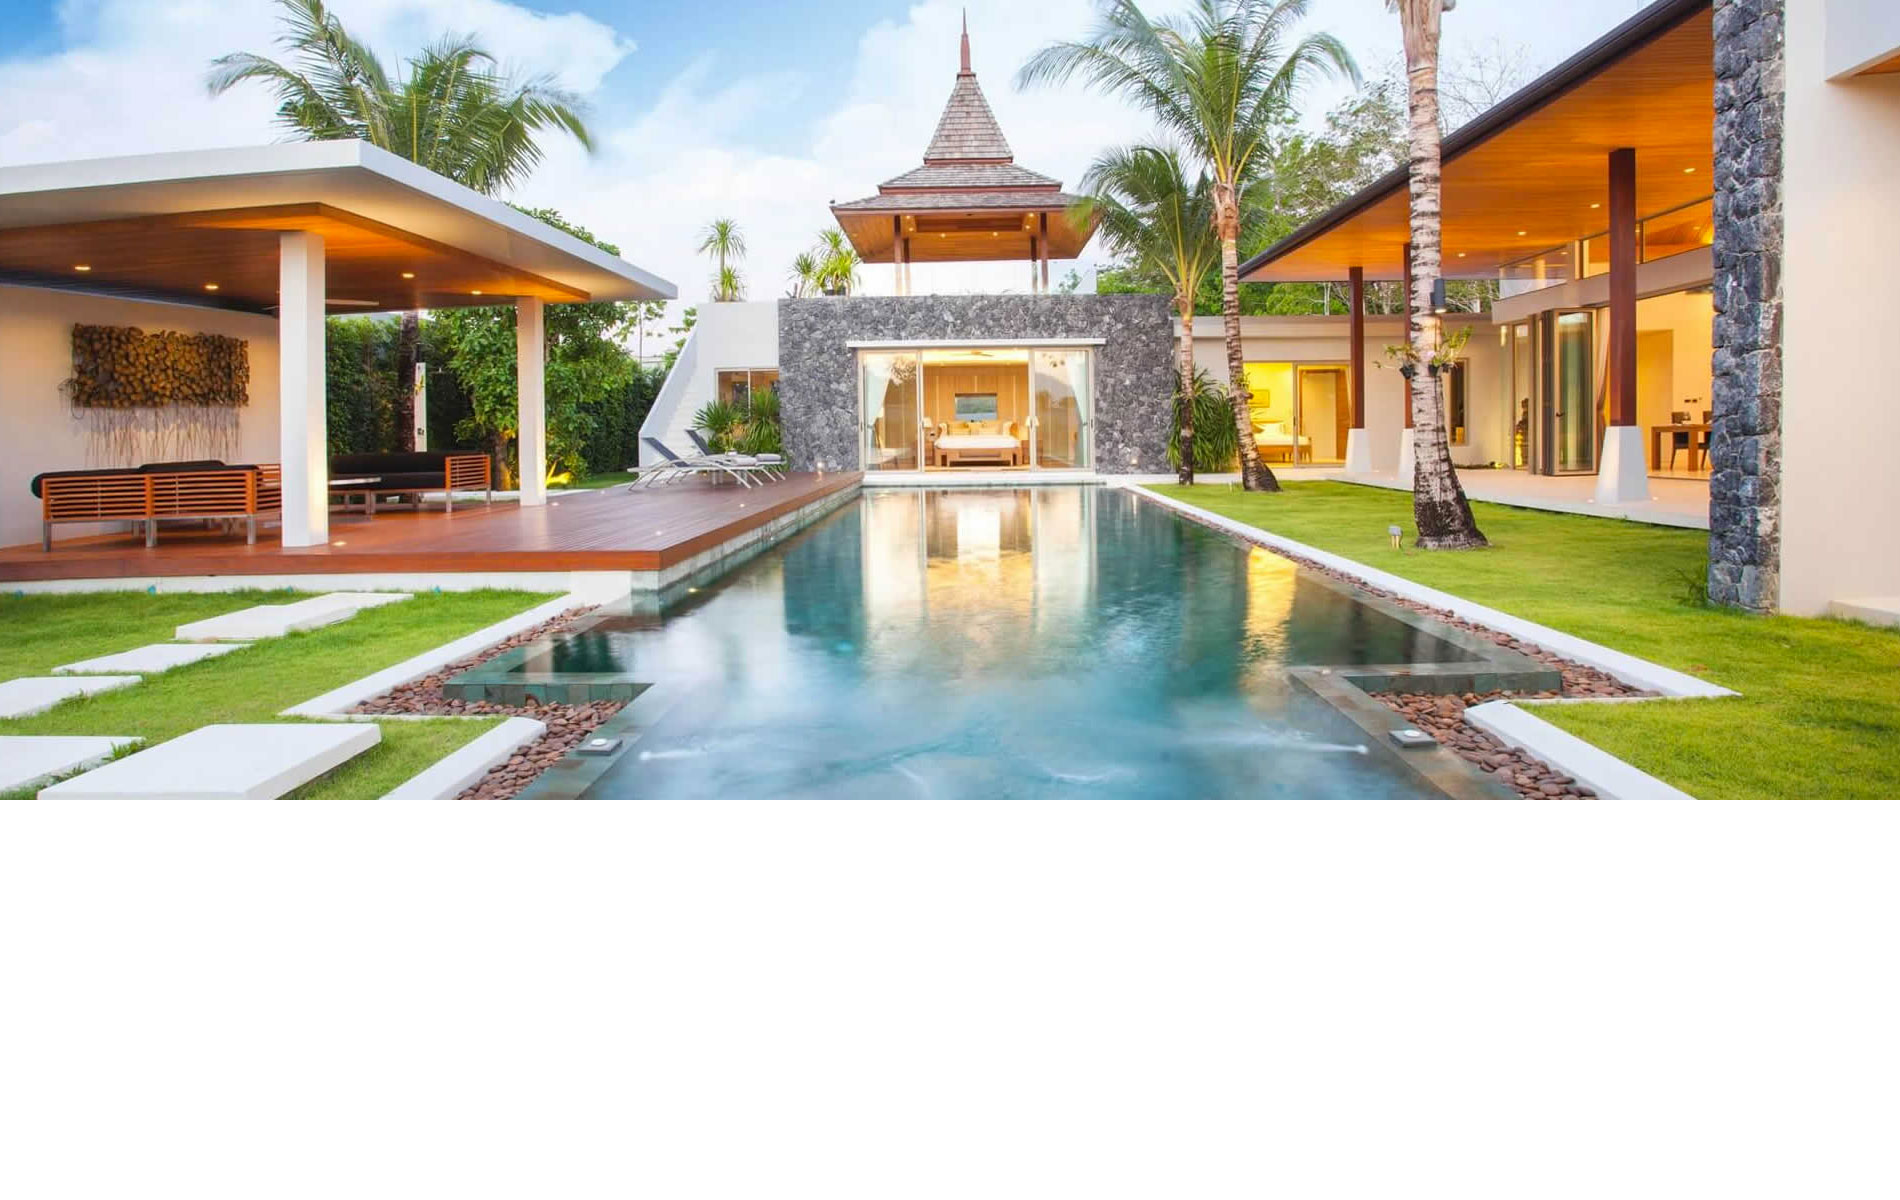 Phuket Real Estates and Property, Sale , Rental, Buy